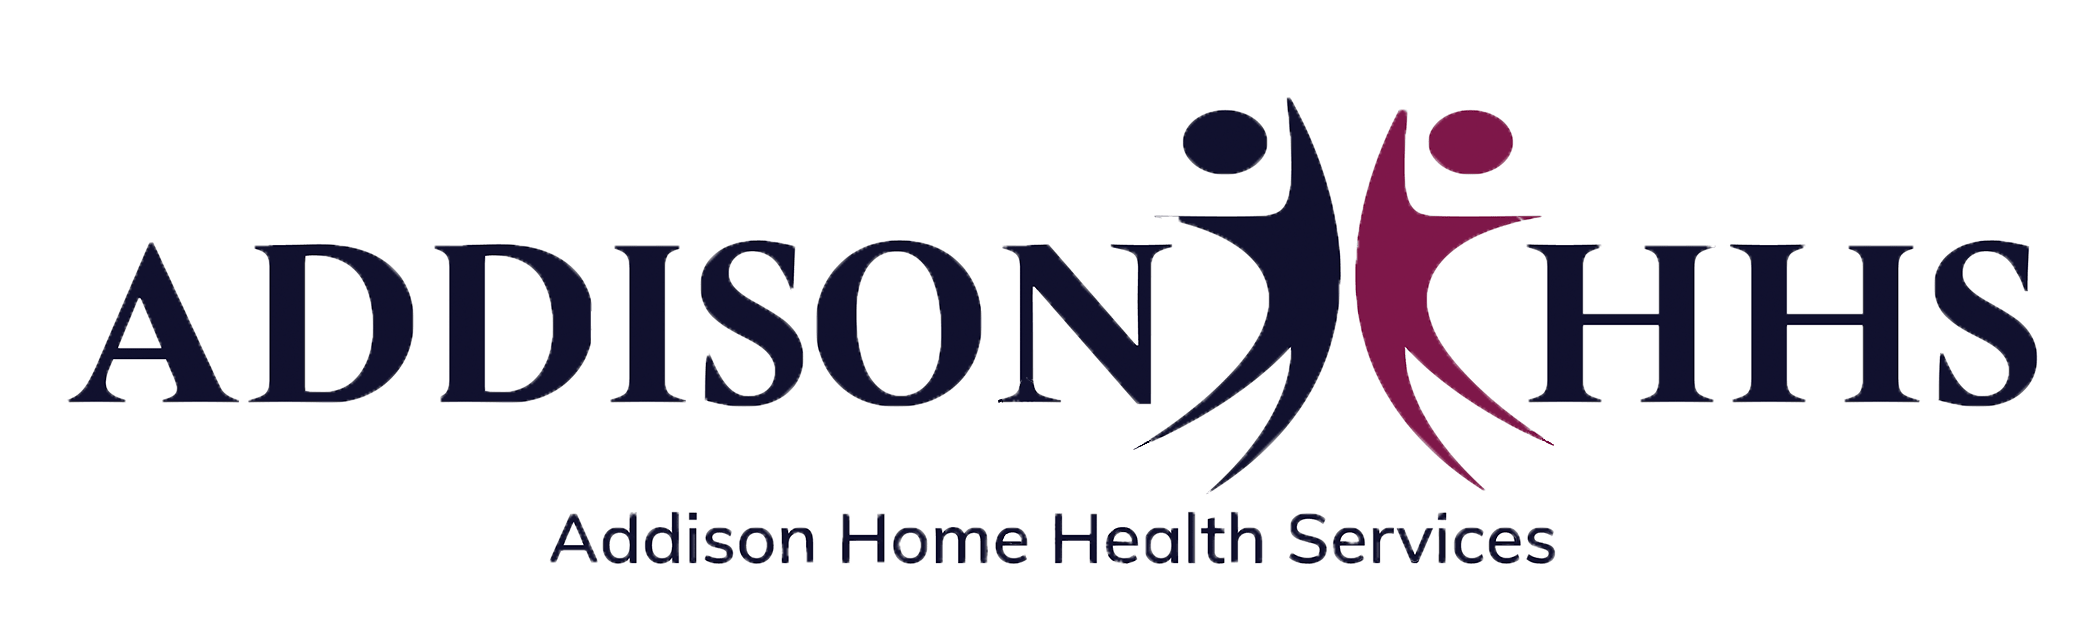 ADDISON HOME HEALTH SERVICES